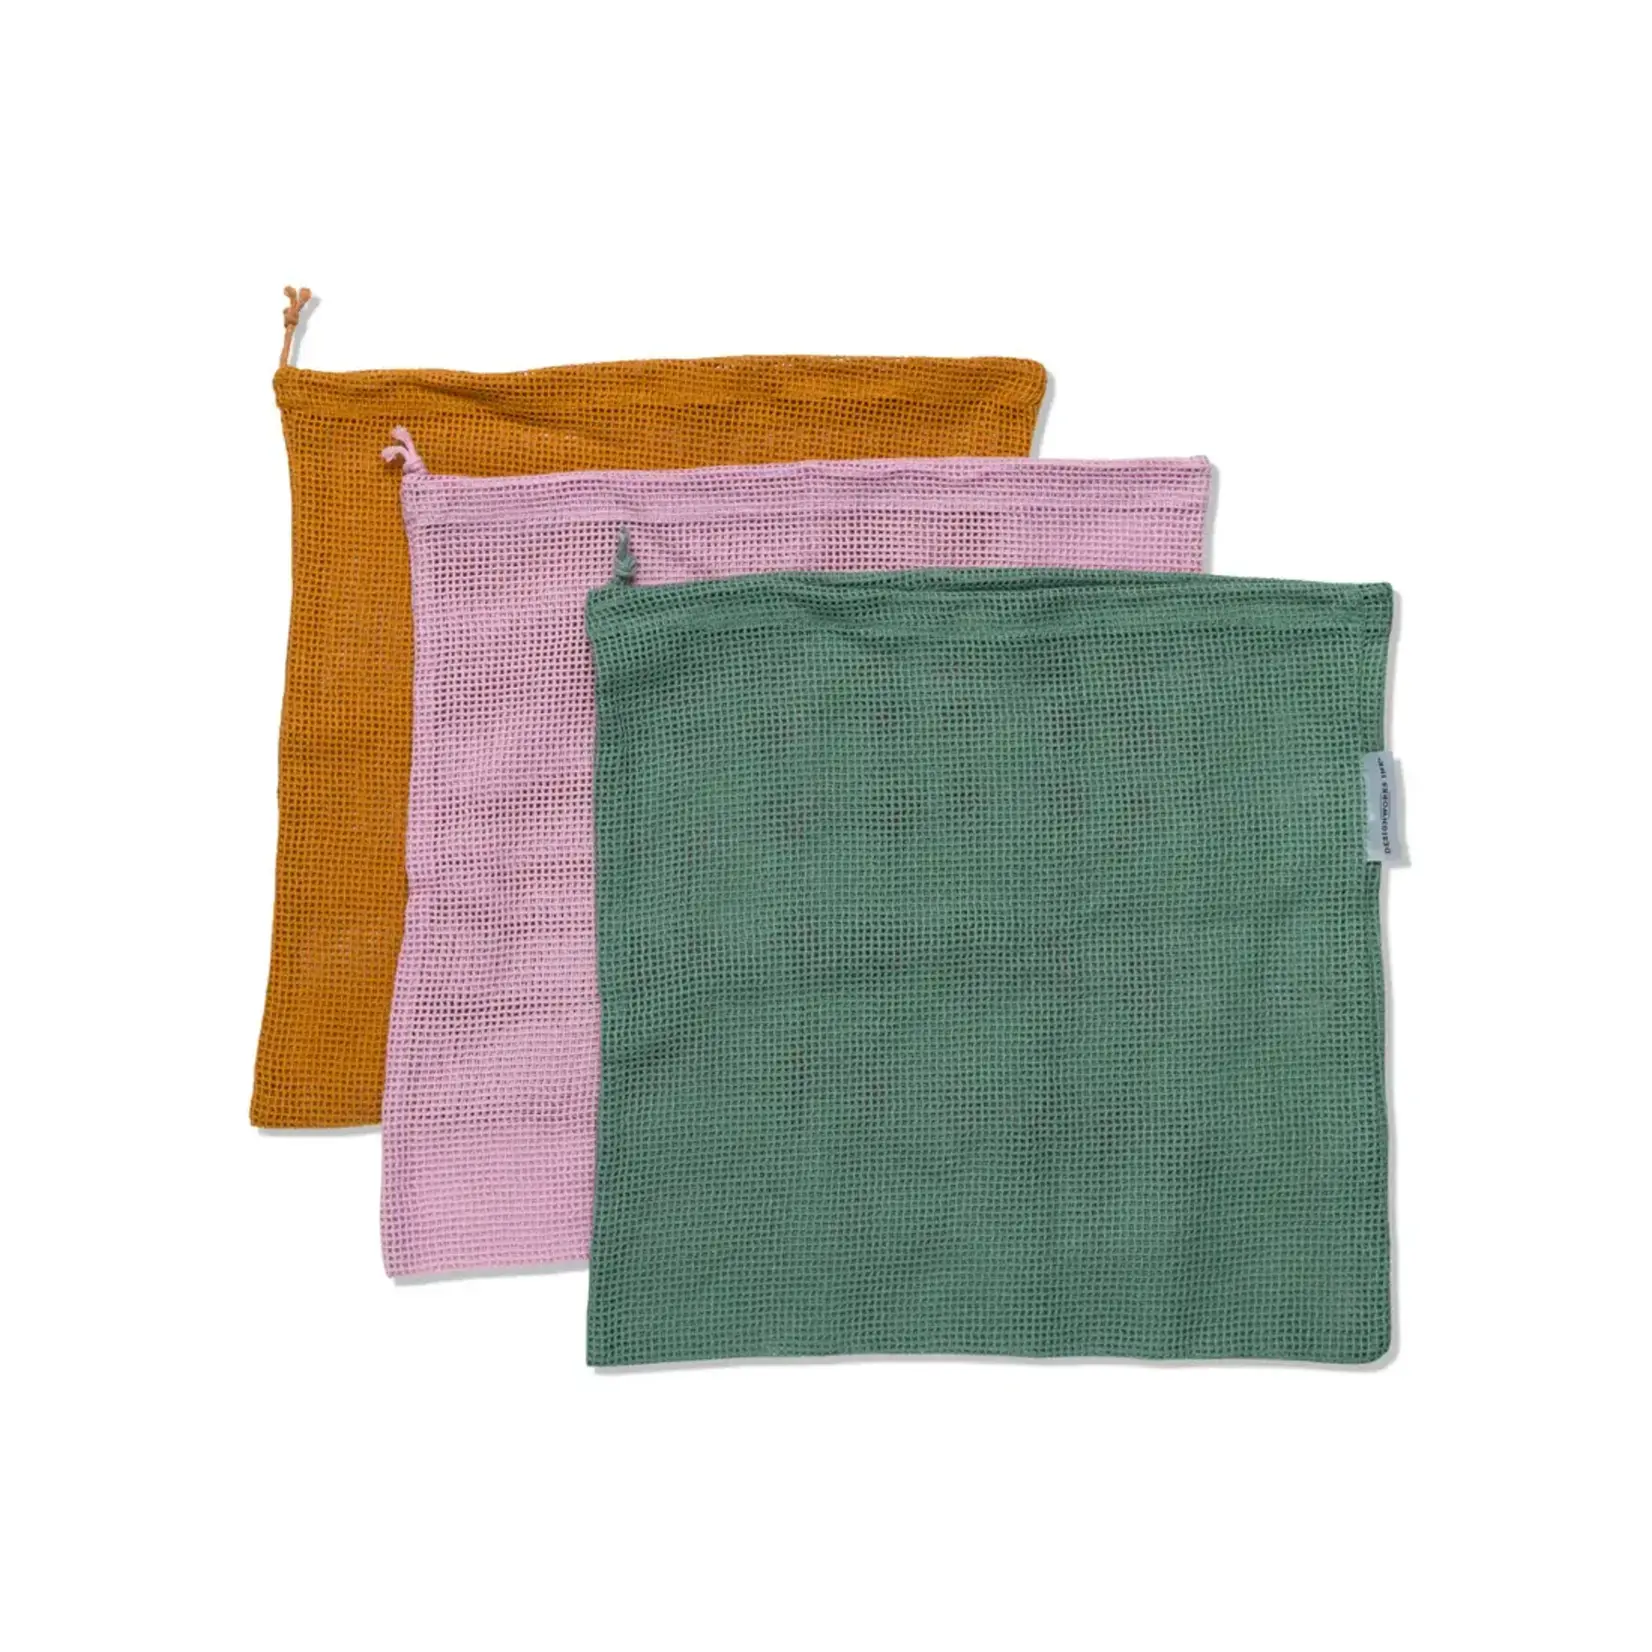 Designworks Ink Cotton Reusable Produce Bags - Set of 3 -